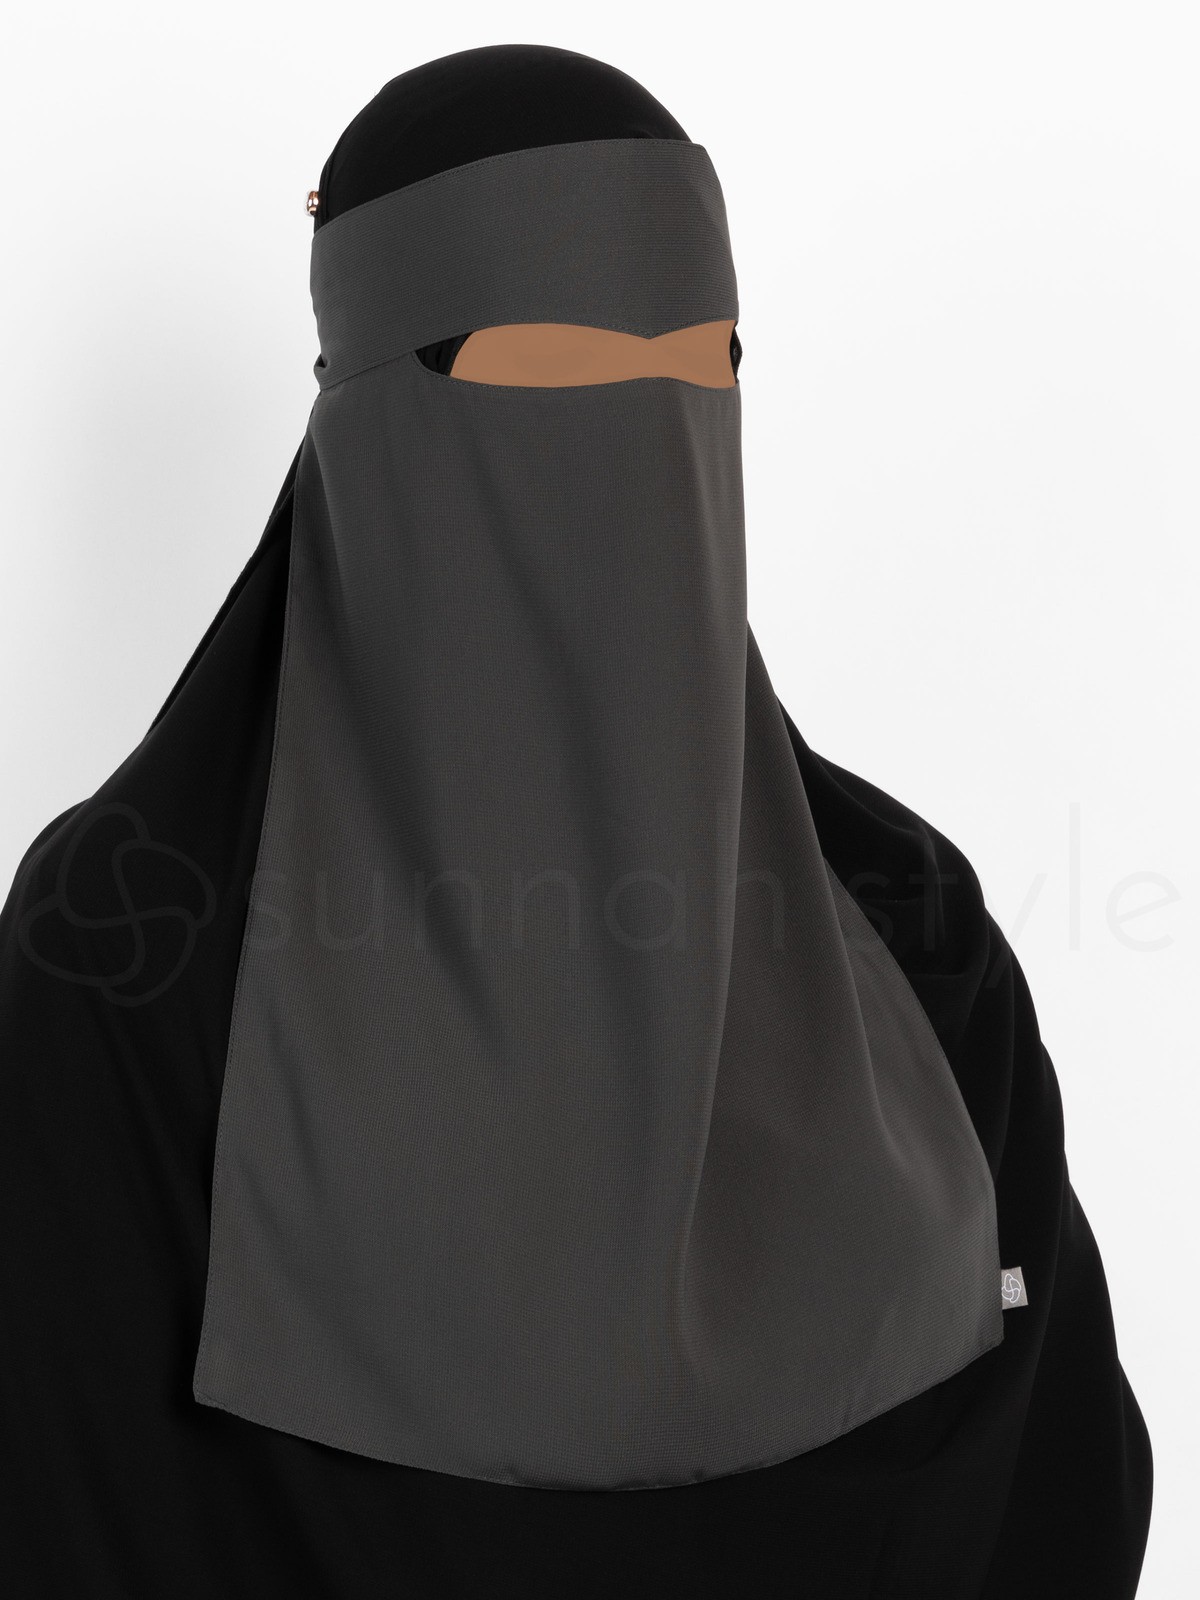 Sunnah Style - One Layer Widow's Peak Niqab (Dark Grey)